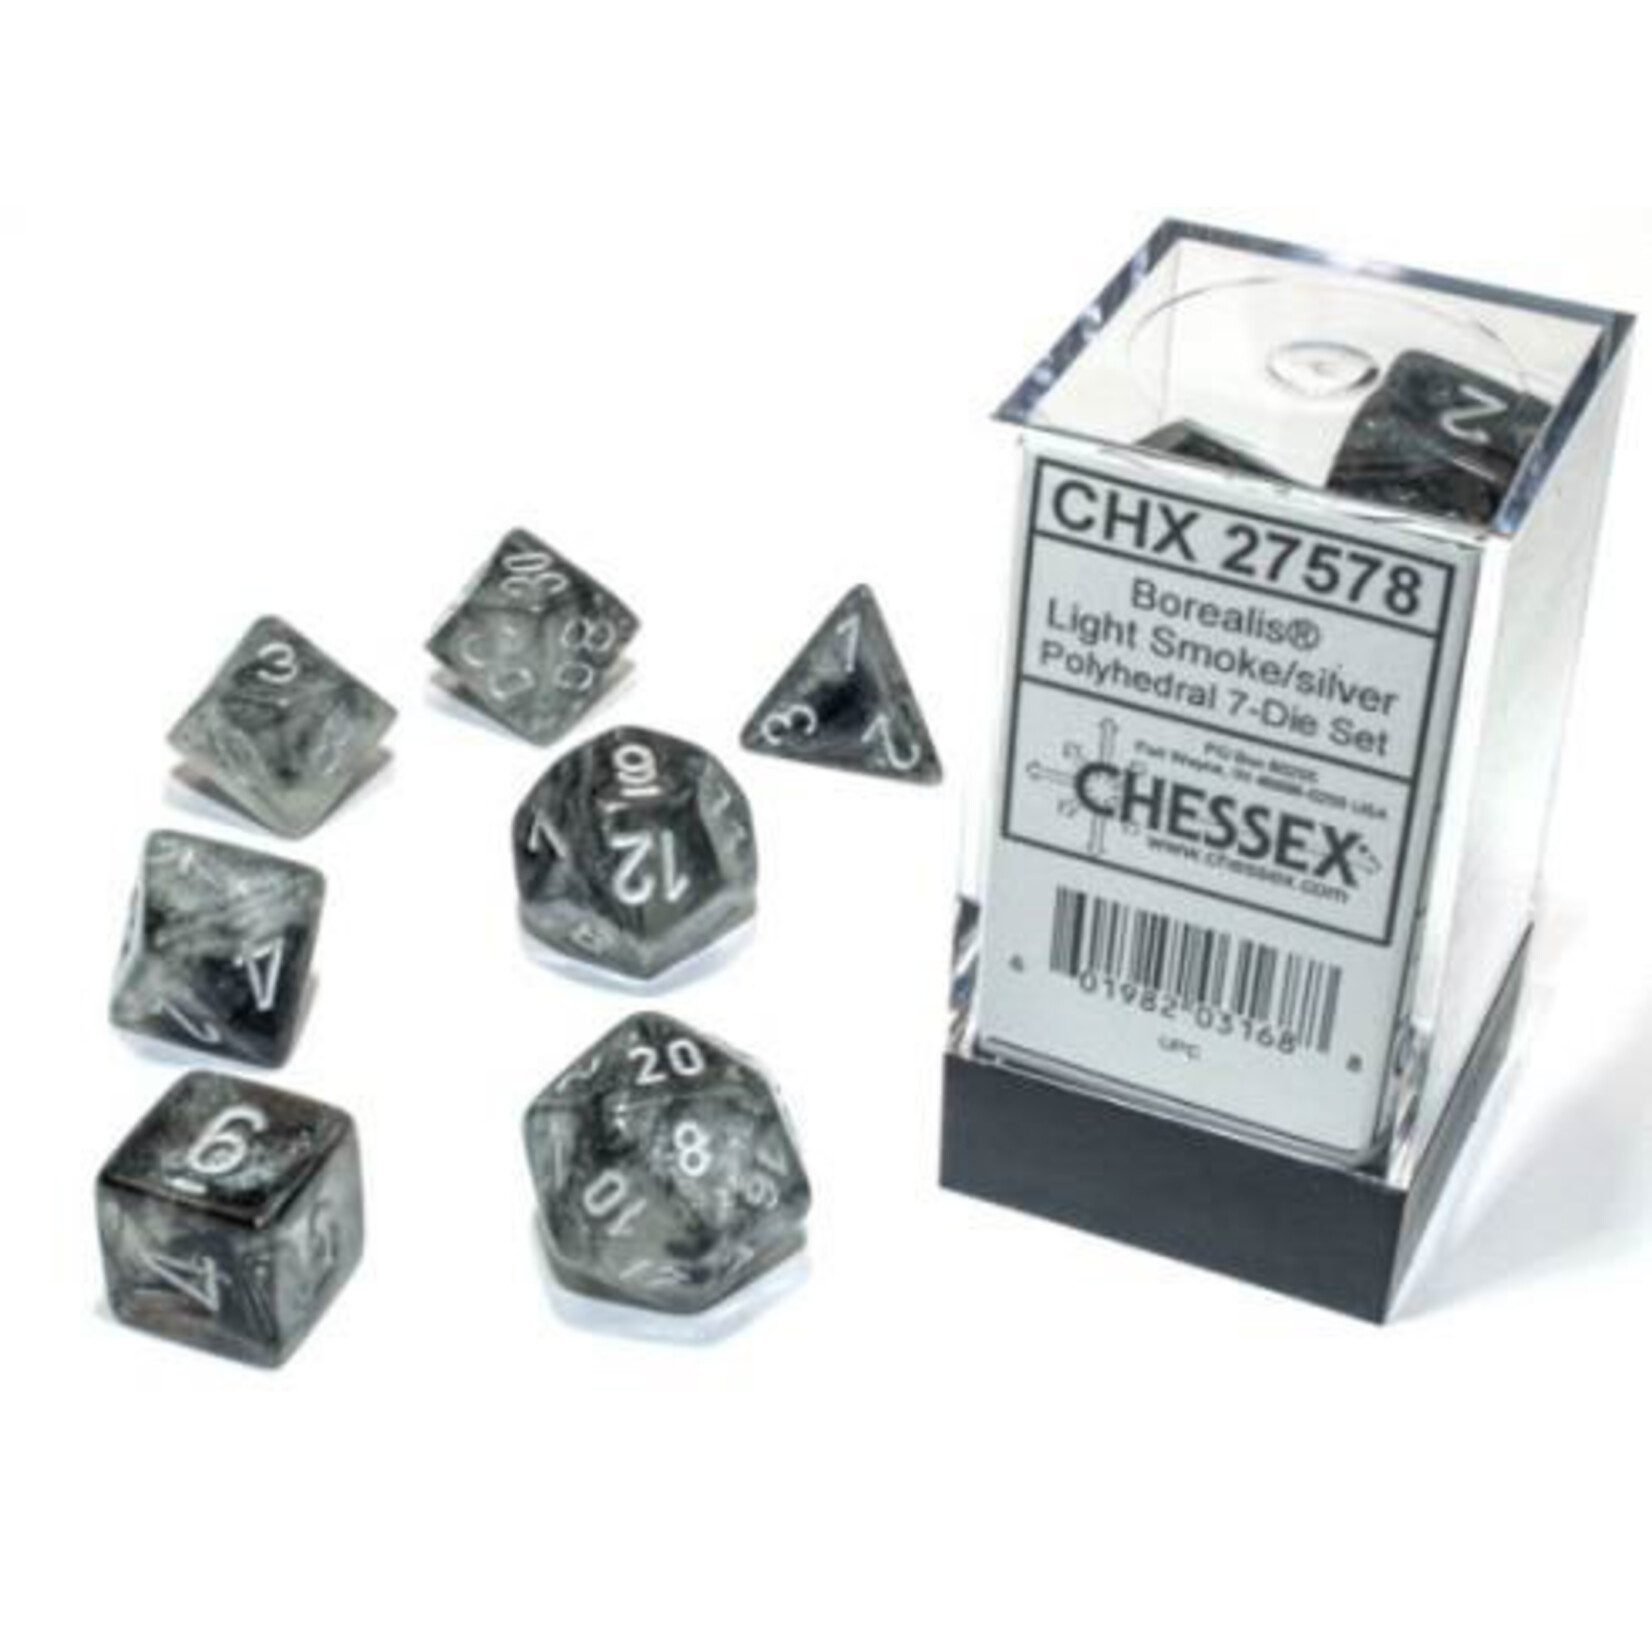 Chessex Chessex 7-Die set Borealis Luminary  - Light Smoke/Silver